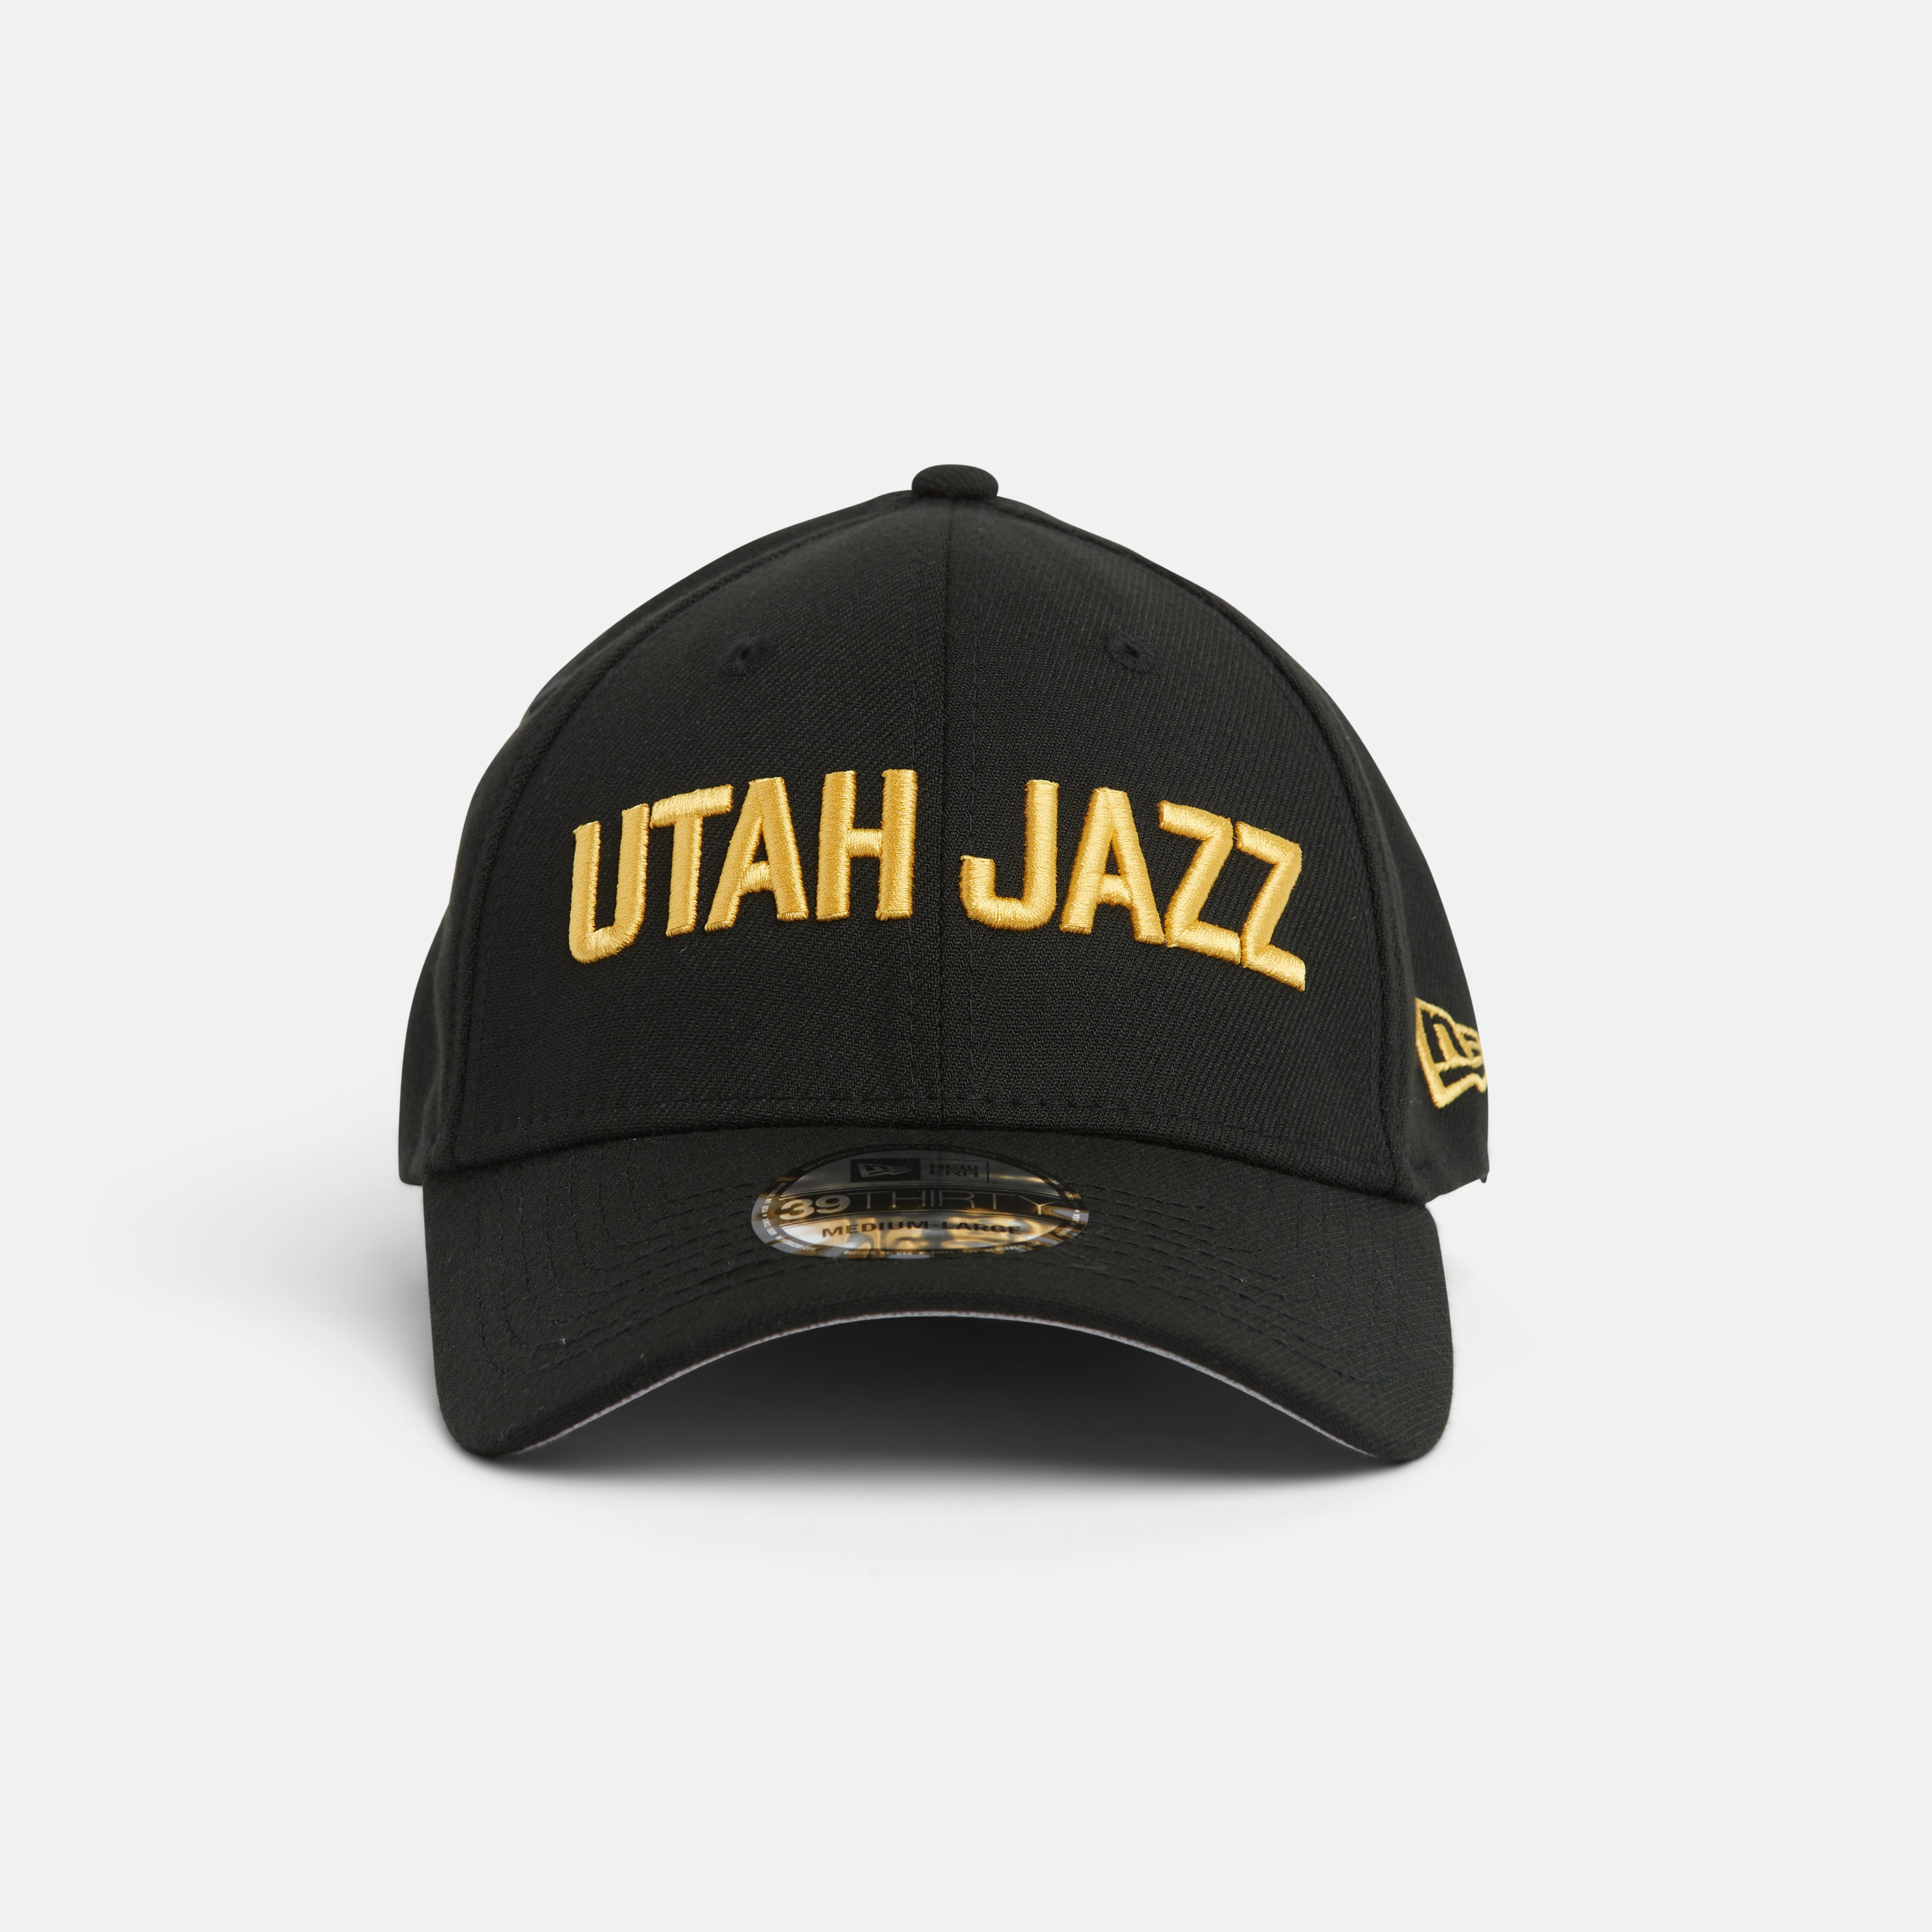 Front black 3930 with yellow Utah Jazz wordmark logo.